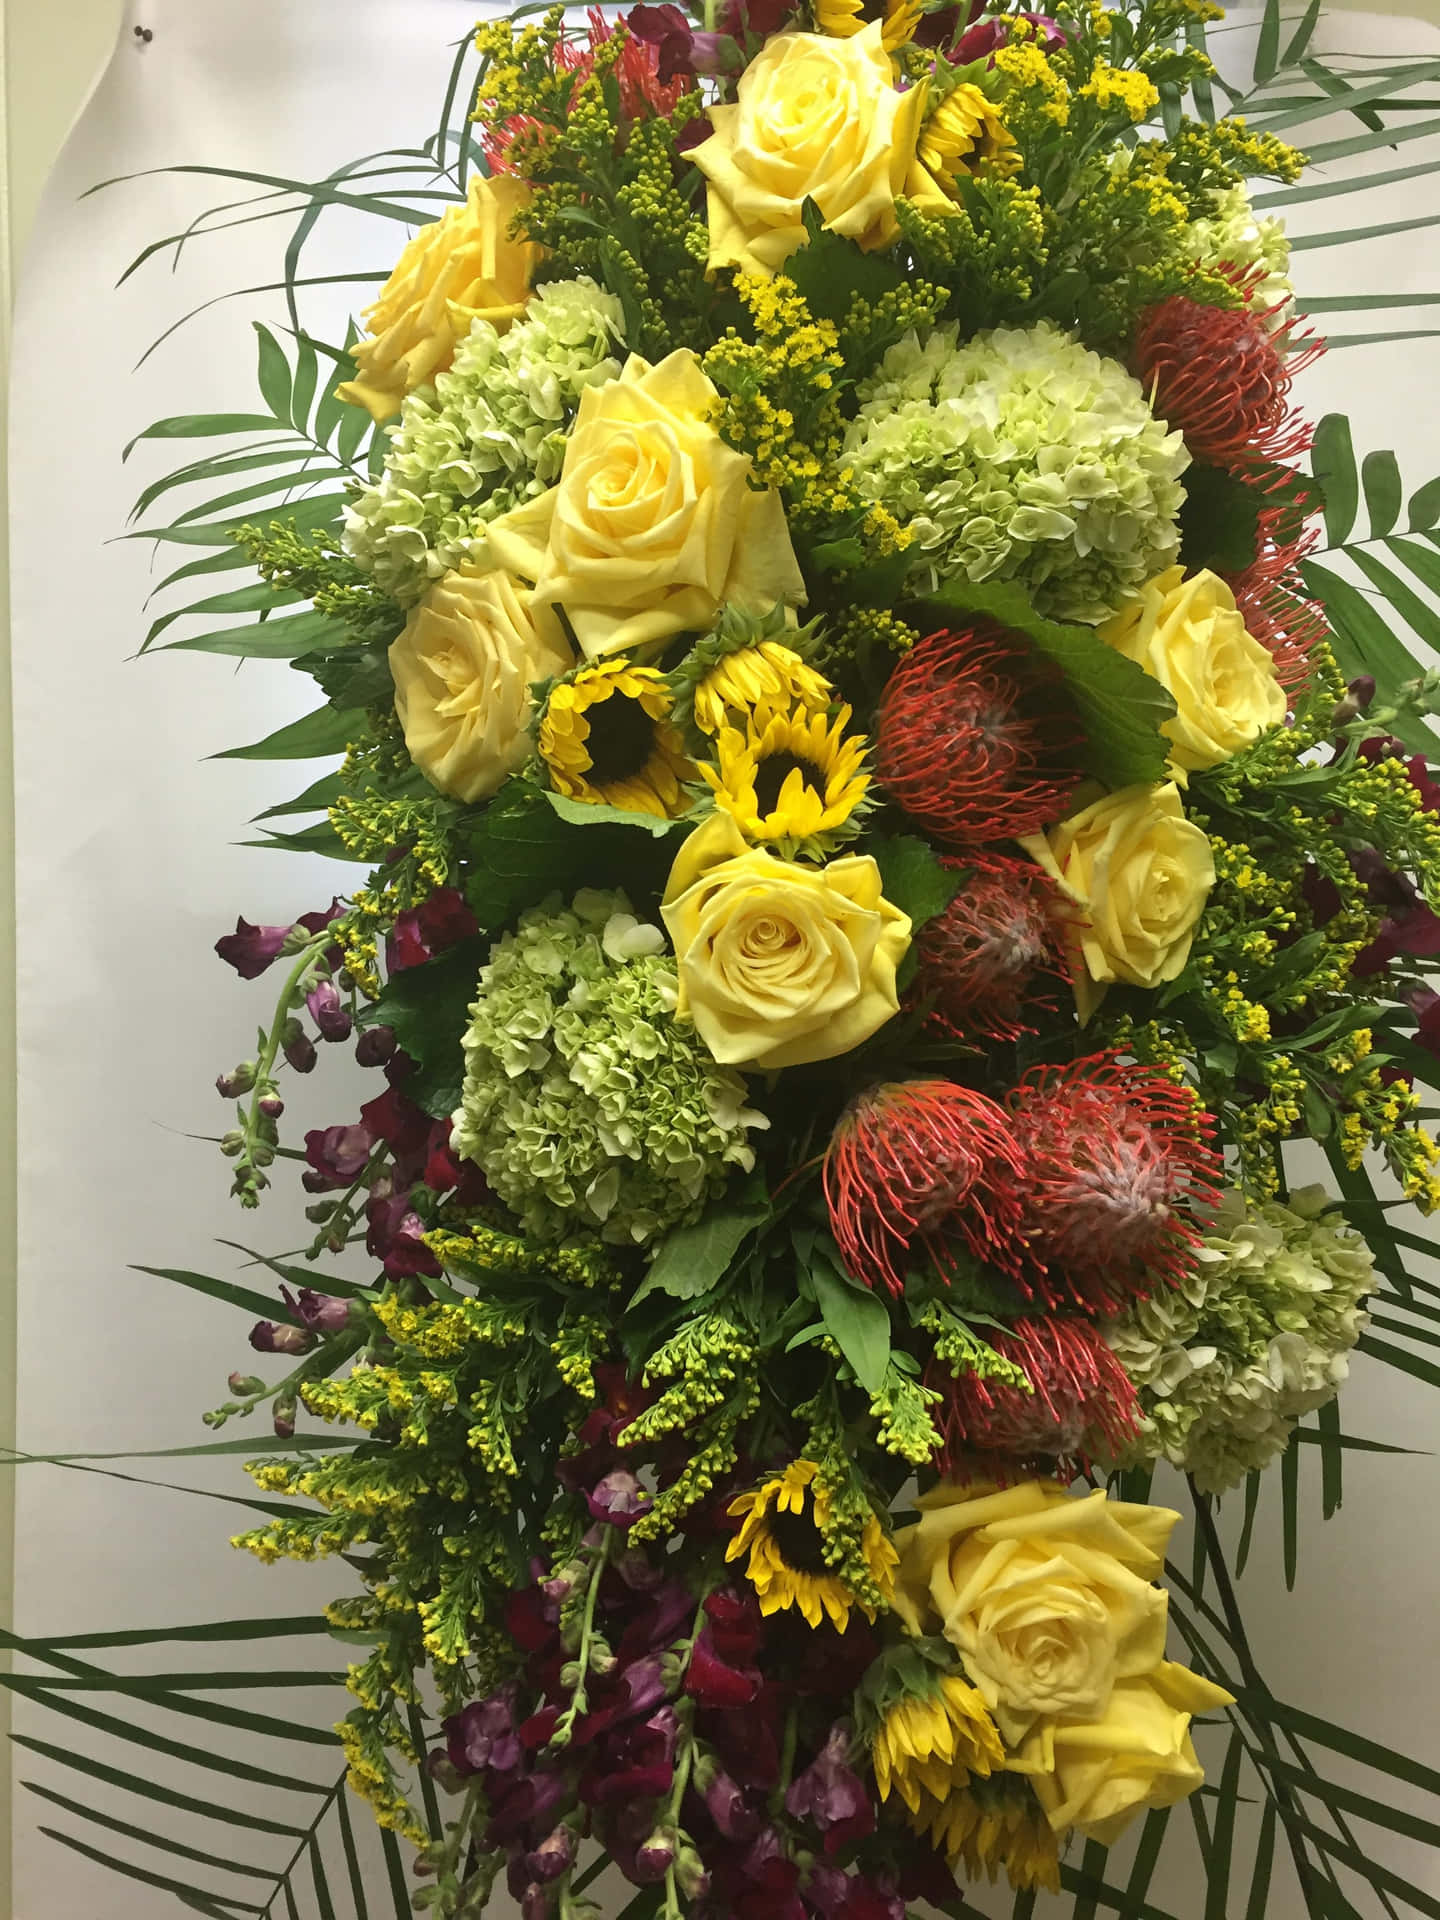 Send your sympathy with an elegant funeral flower arrangement